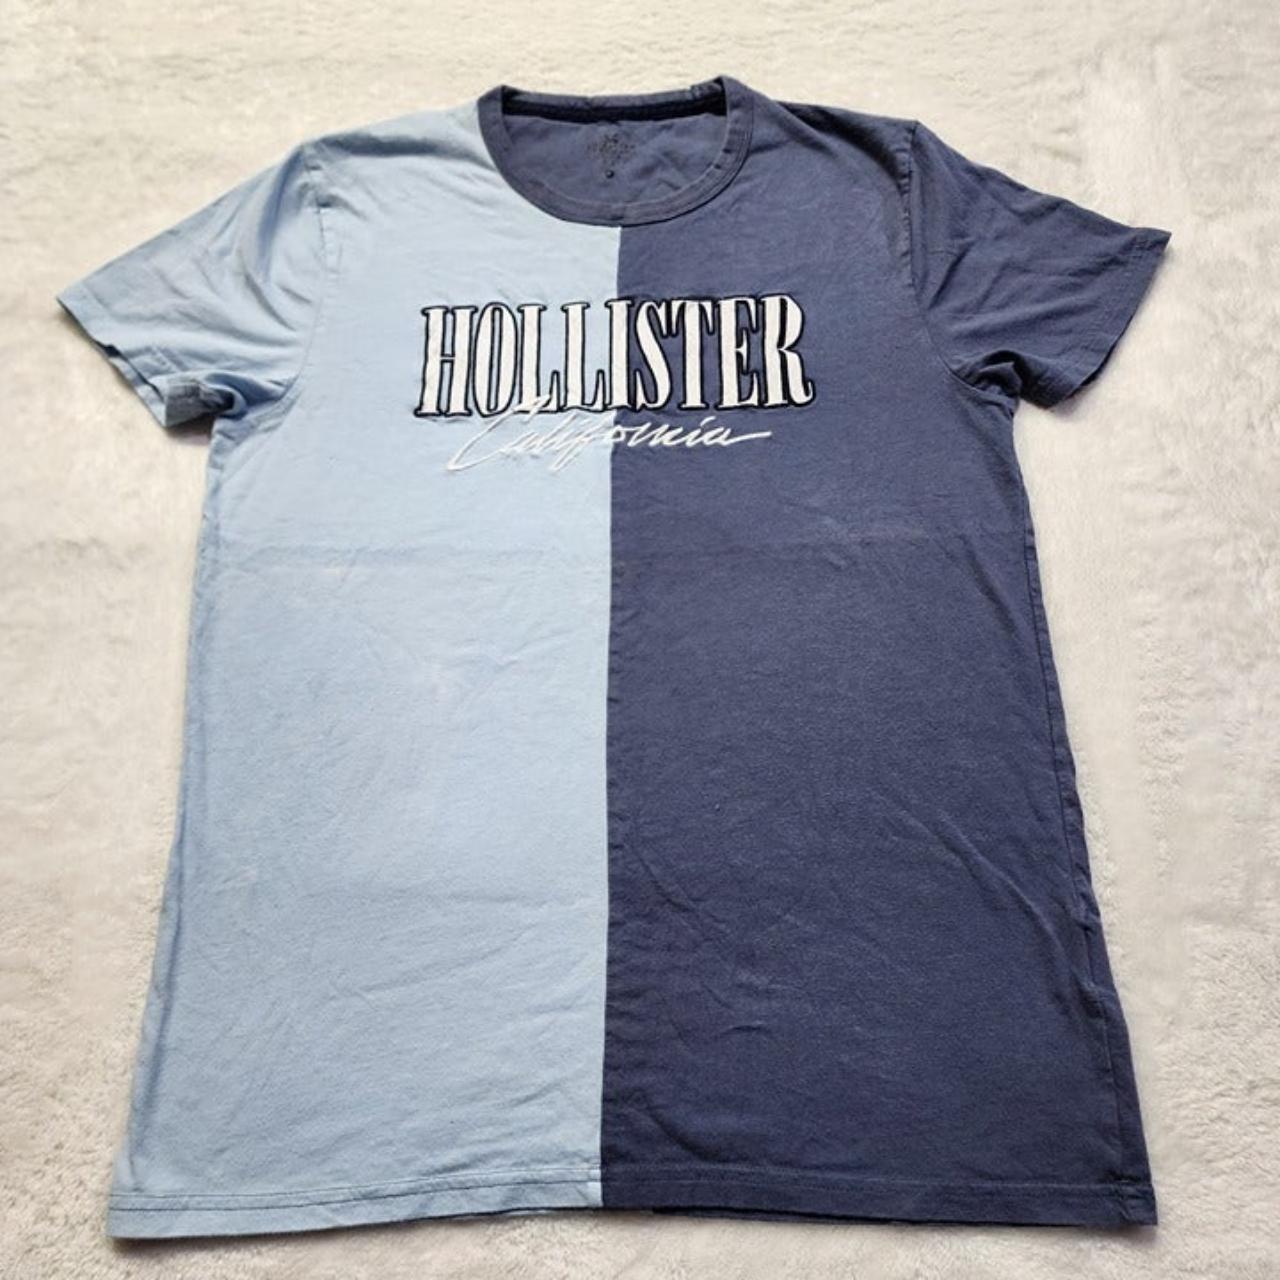 Hollister t shirt • Tise